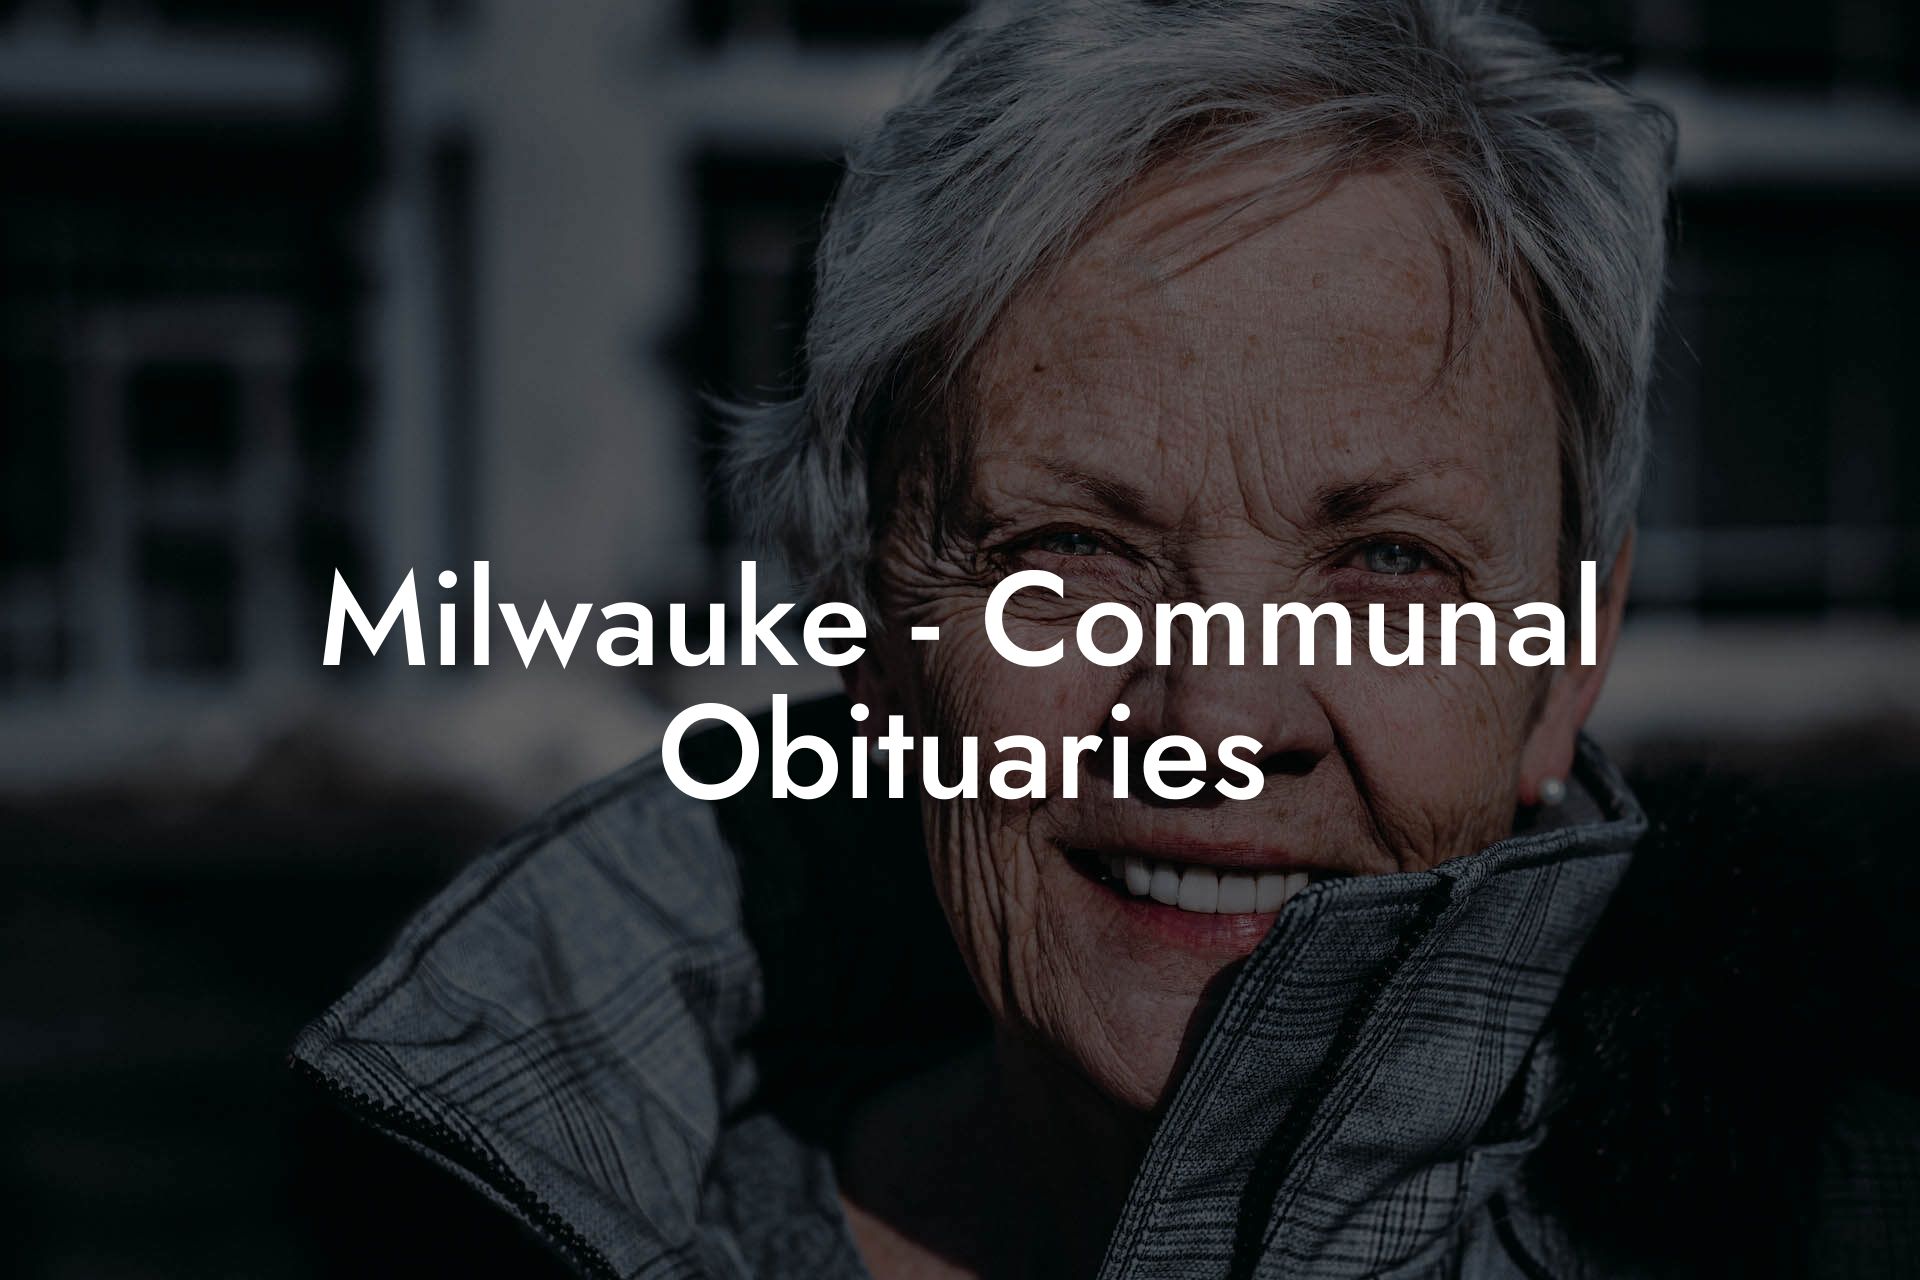 Milwauke - Communal Obituaries